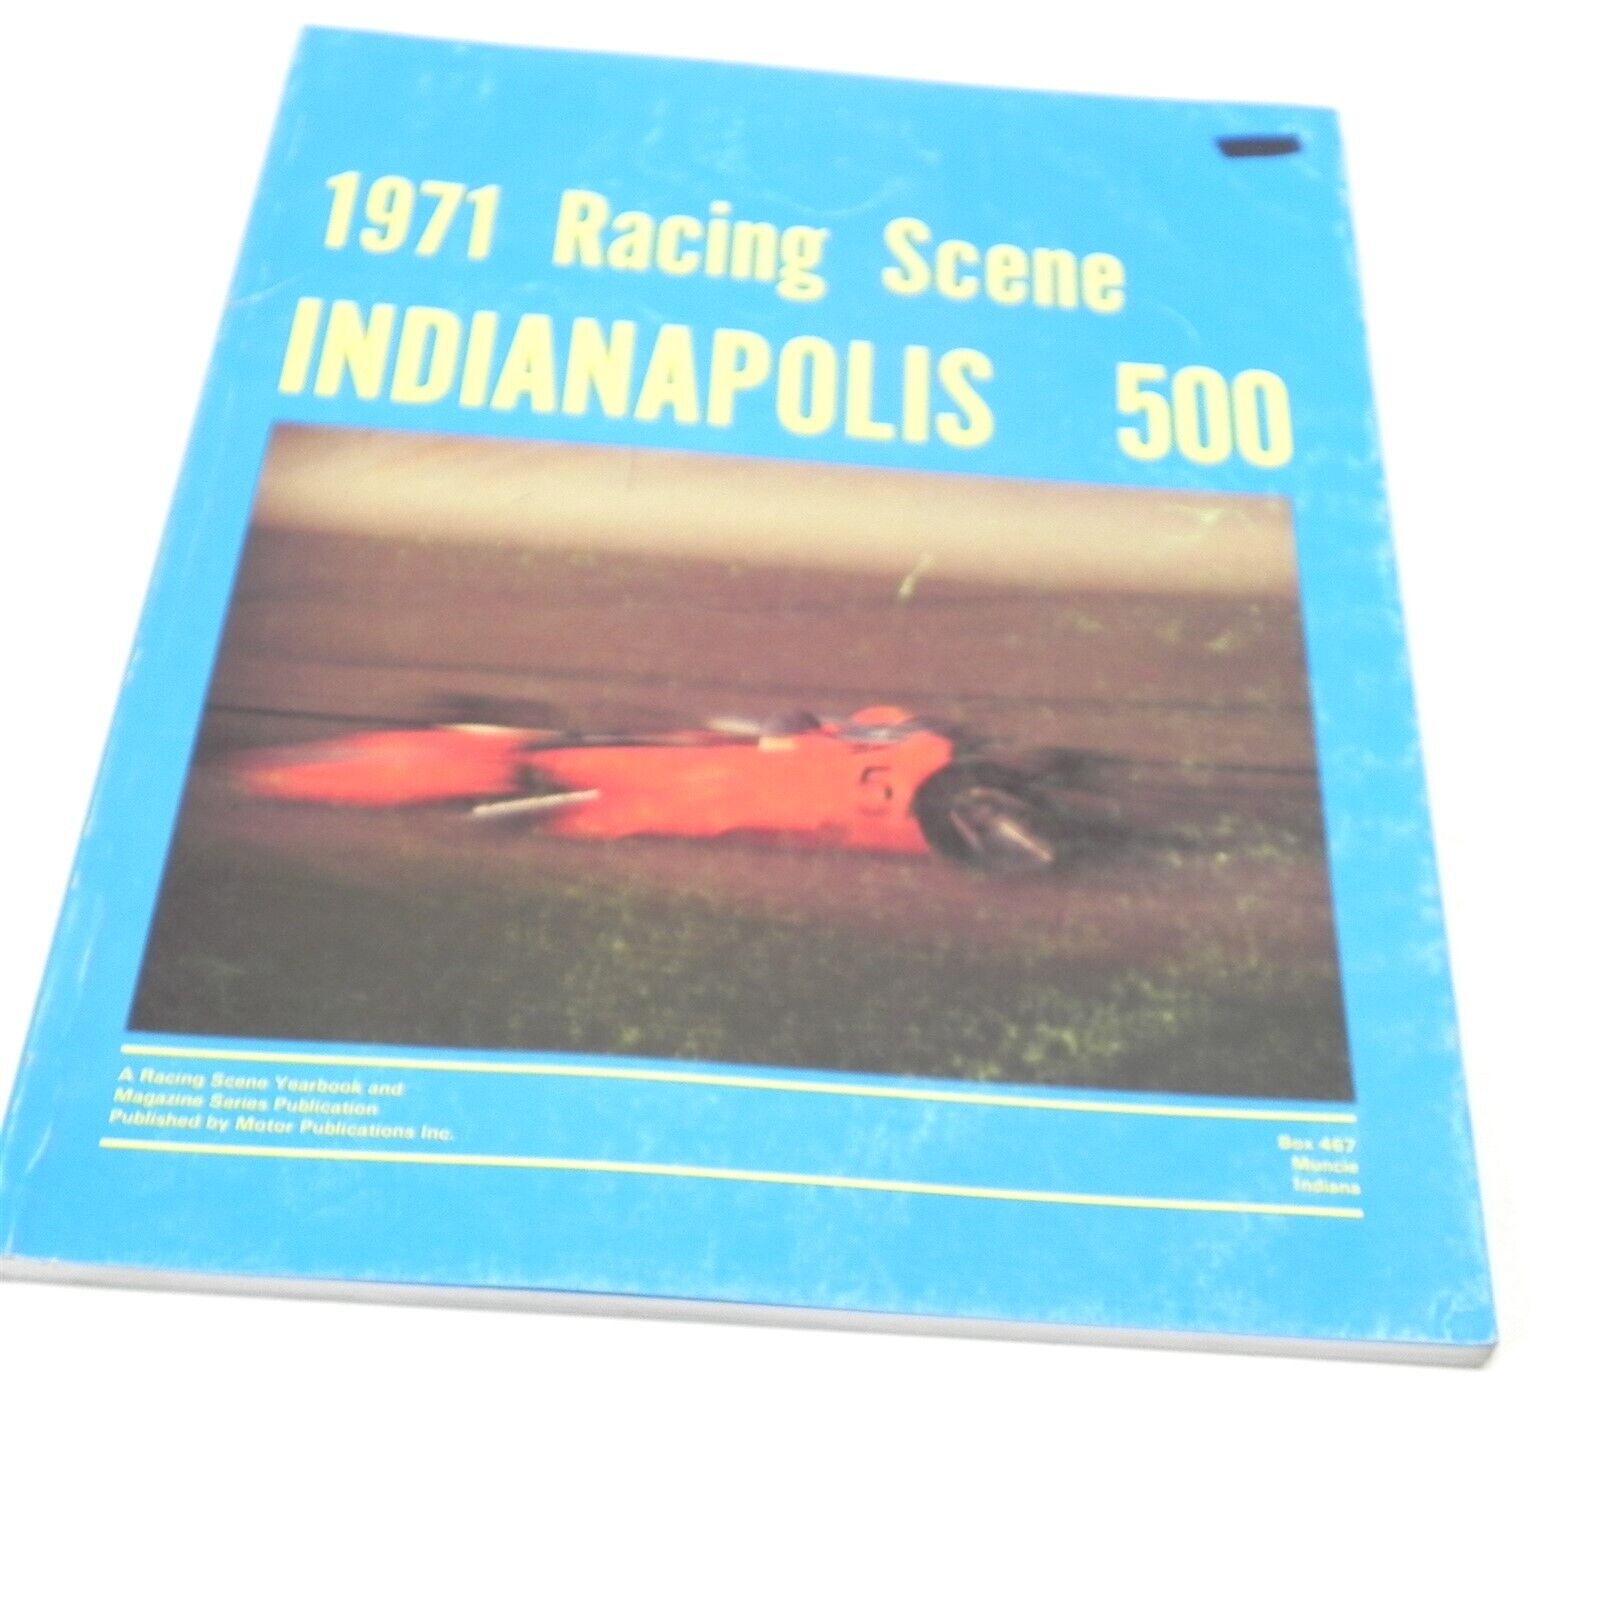 VINTAGE 1971 RACING SCENE INDIANAPOLIS 500 YEARBOOK USED RACING HISTORY BOOK